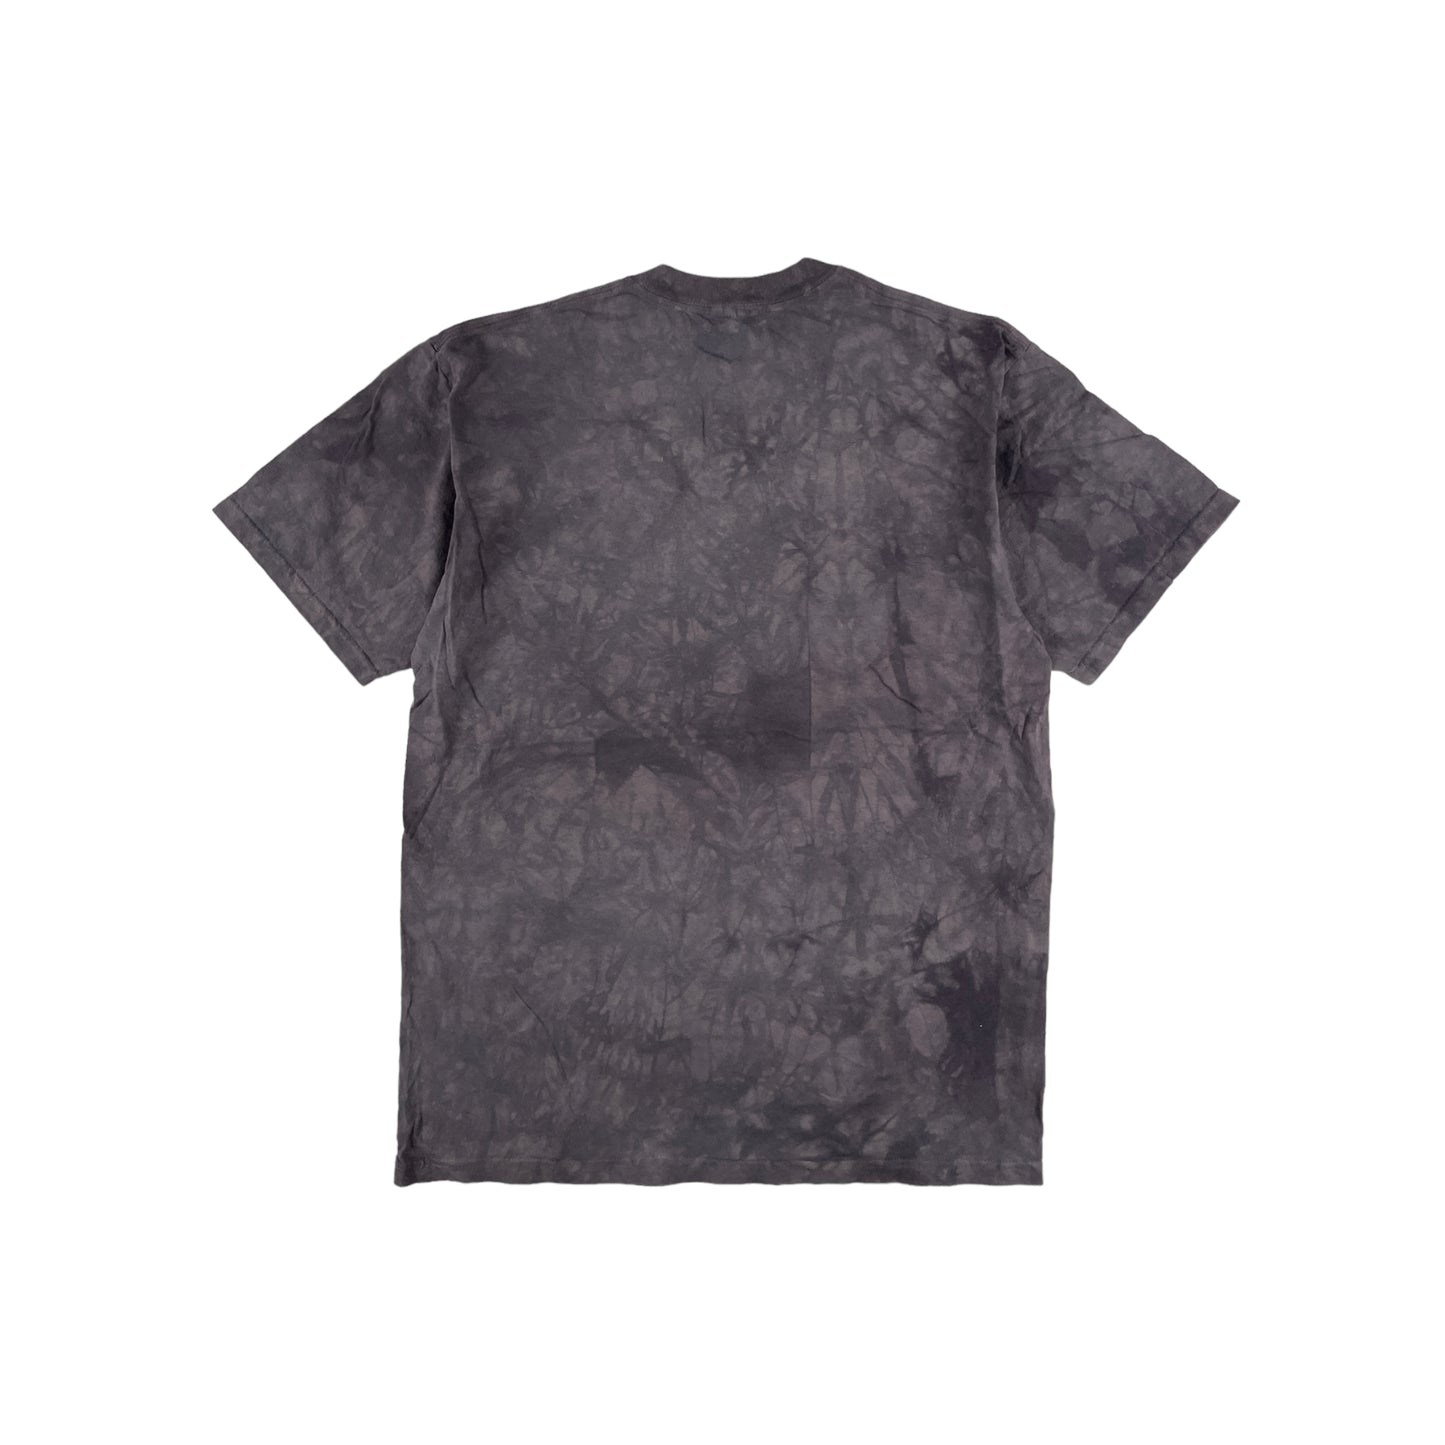 Das Berg-Rhino-T-Shirt